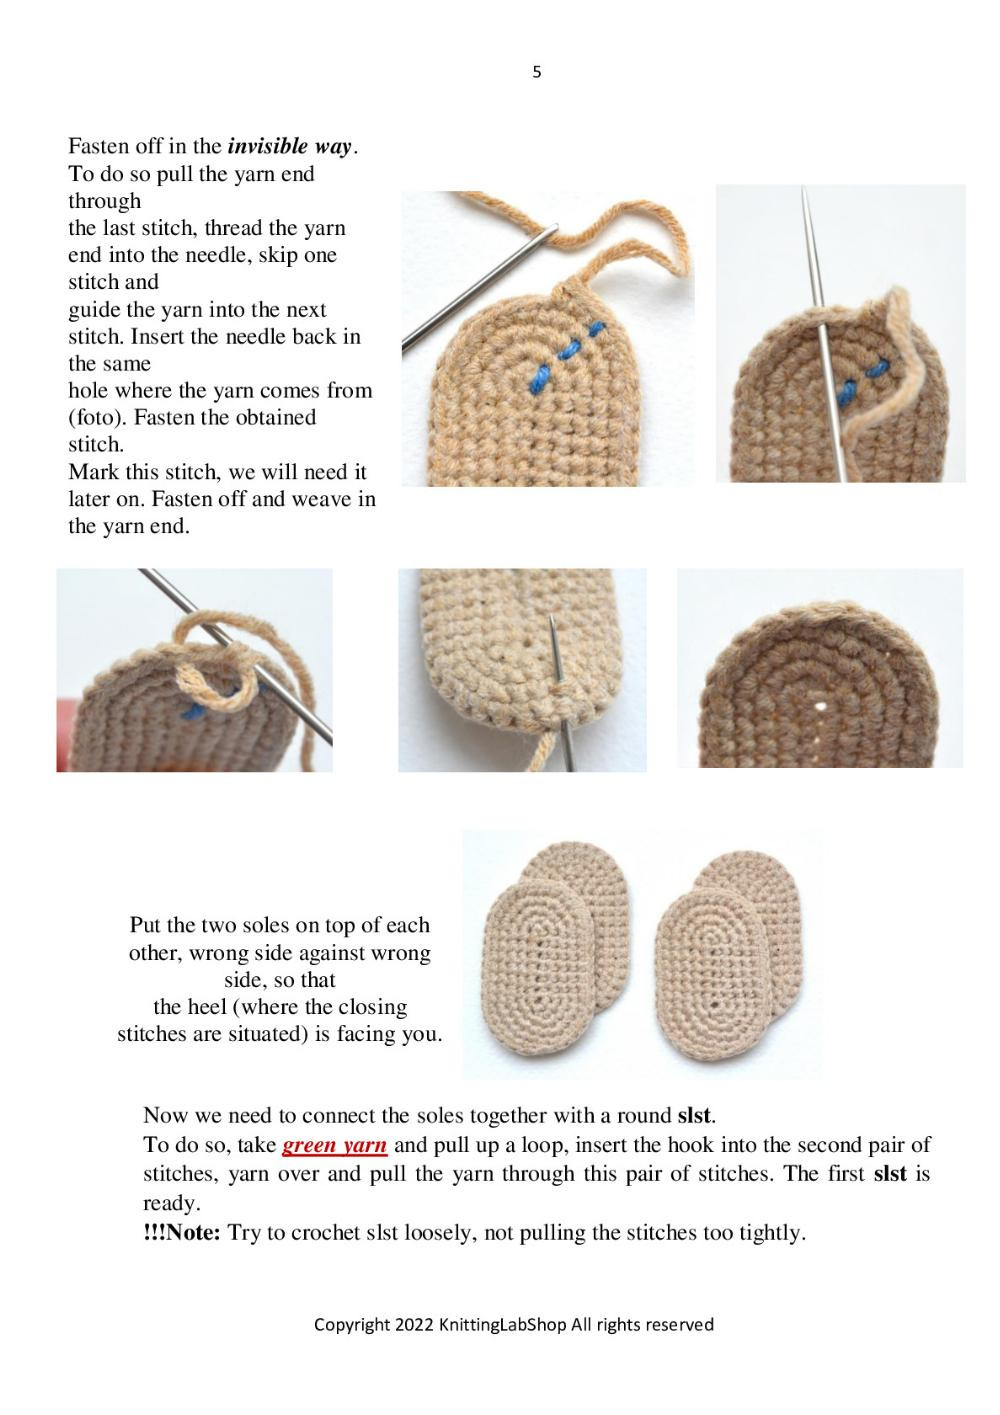 KNITTING LAB PRESENTS DOLL AGNESHKA crochet pattern